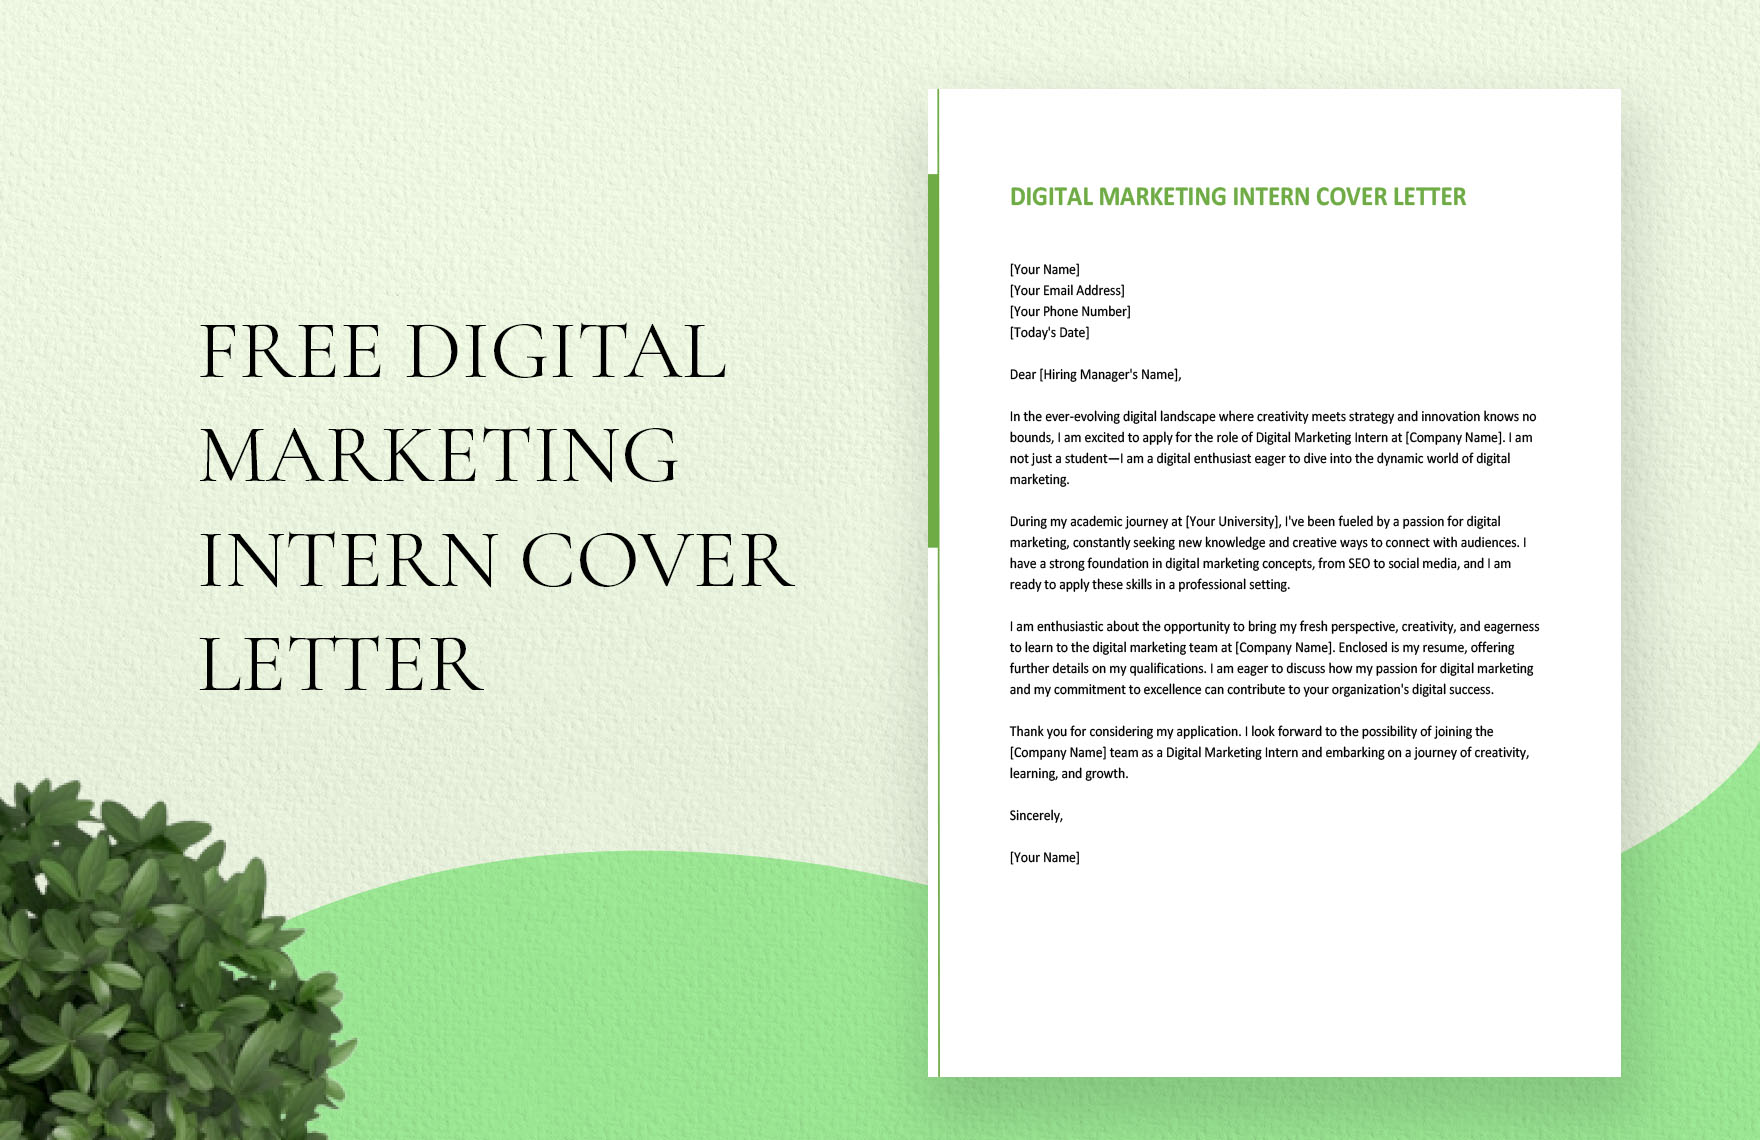 Digital Marketing Intern Cover Letter in Word, Google Docs